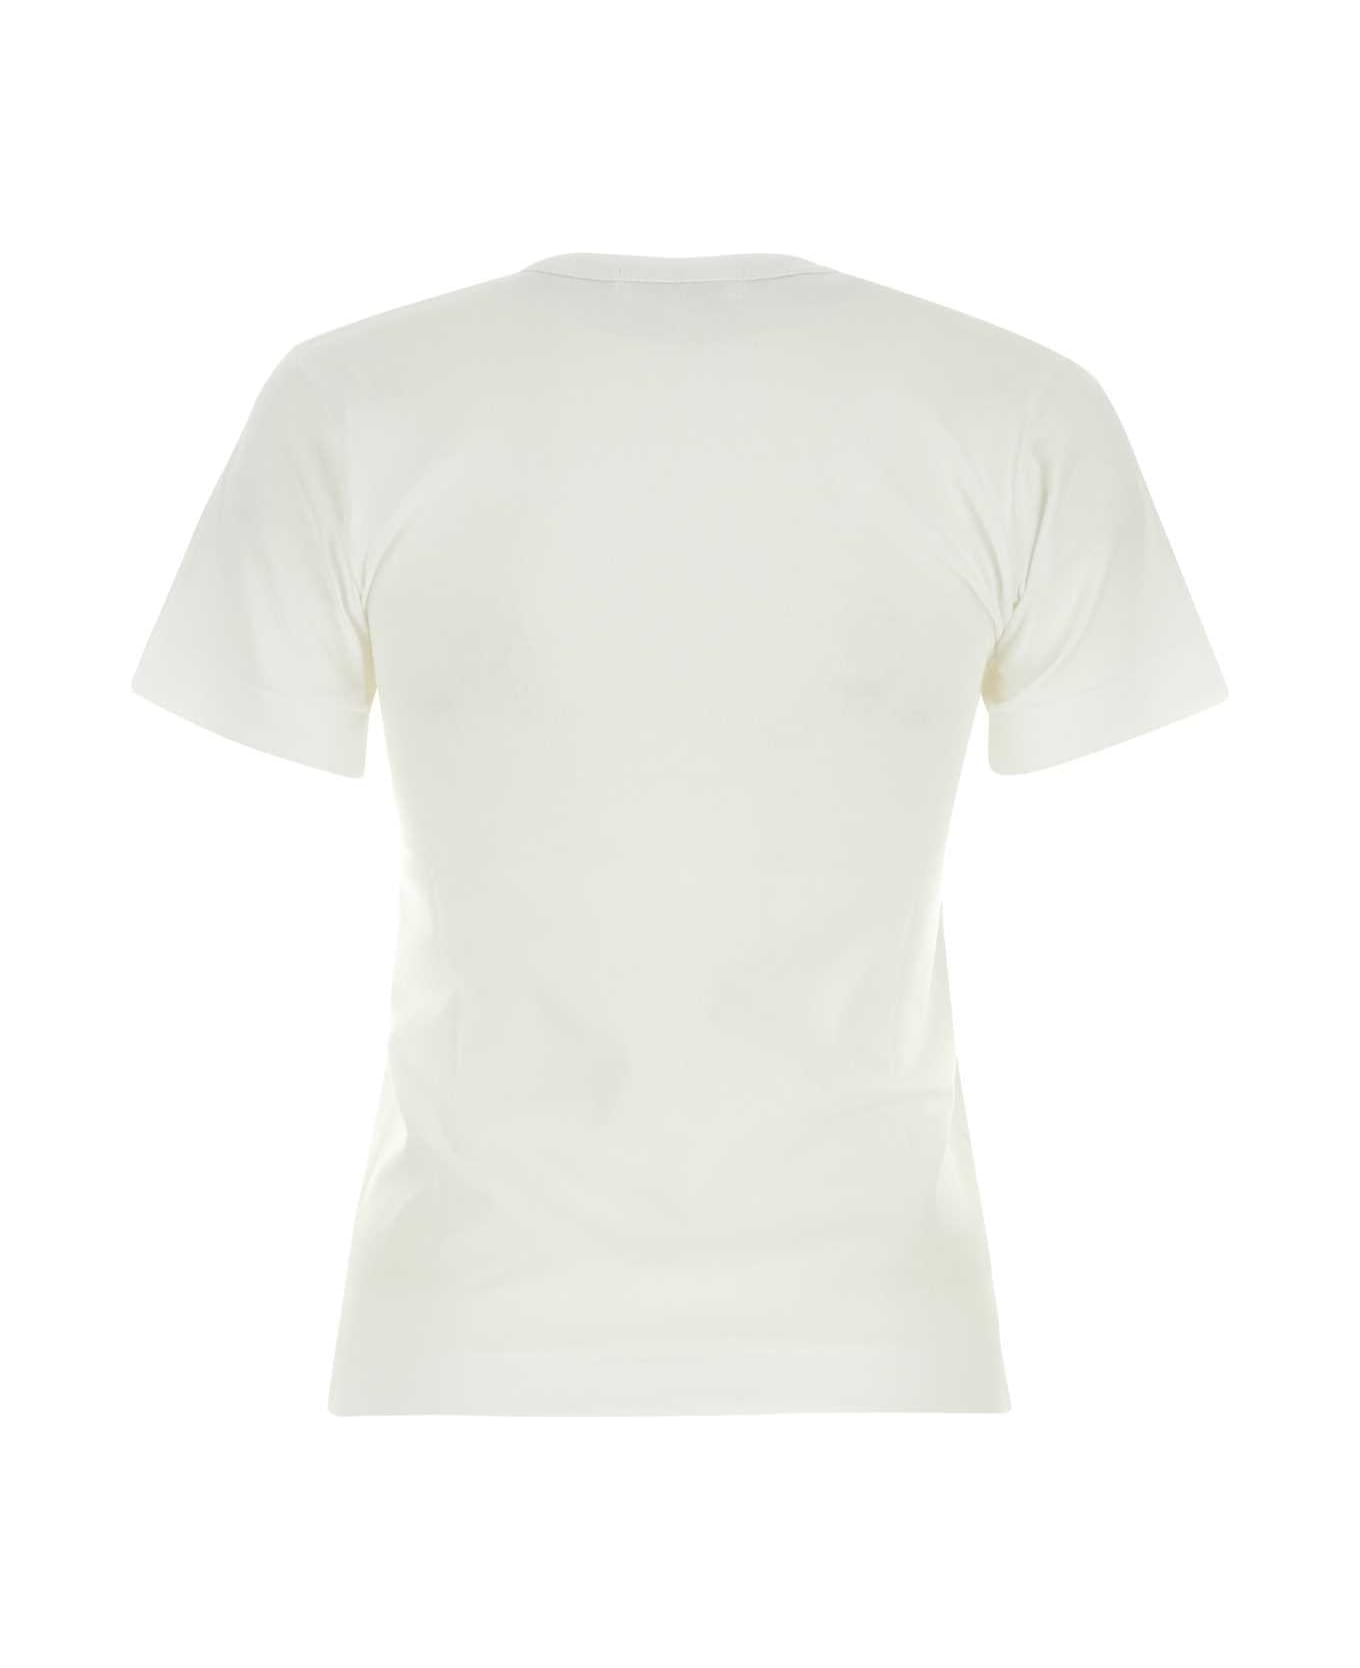 Comme des Garçons Play White Cotton T-shirt - WHTRED Tシャツ